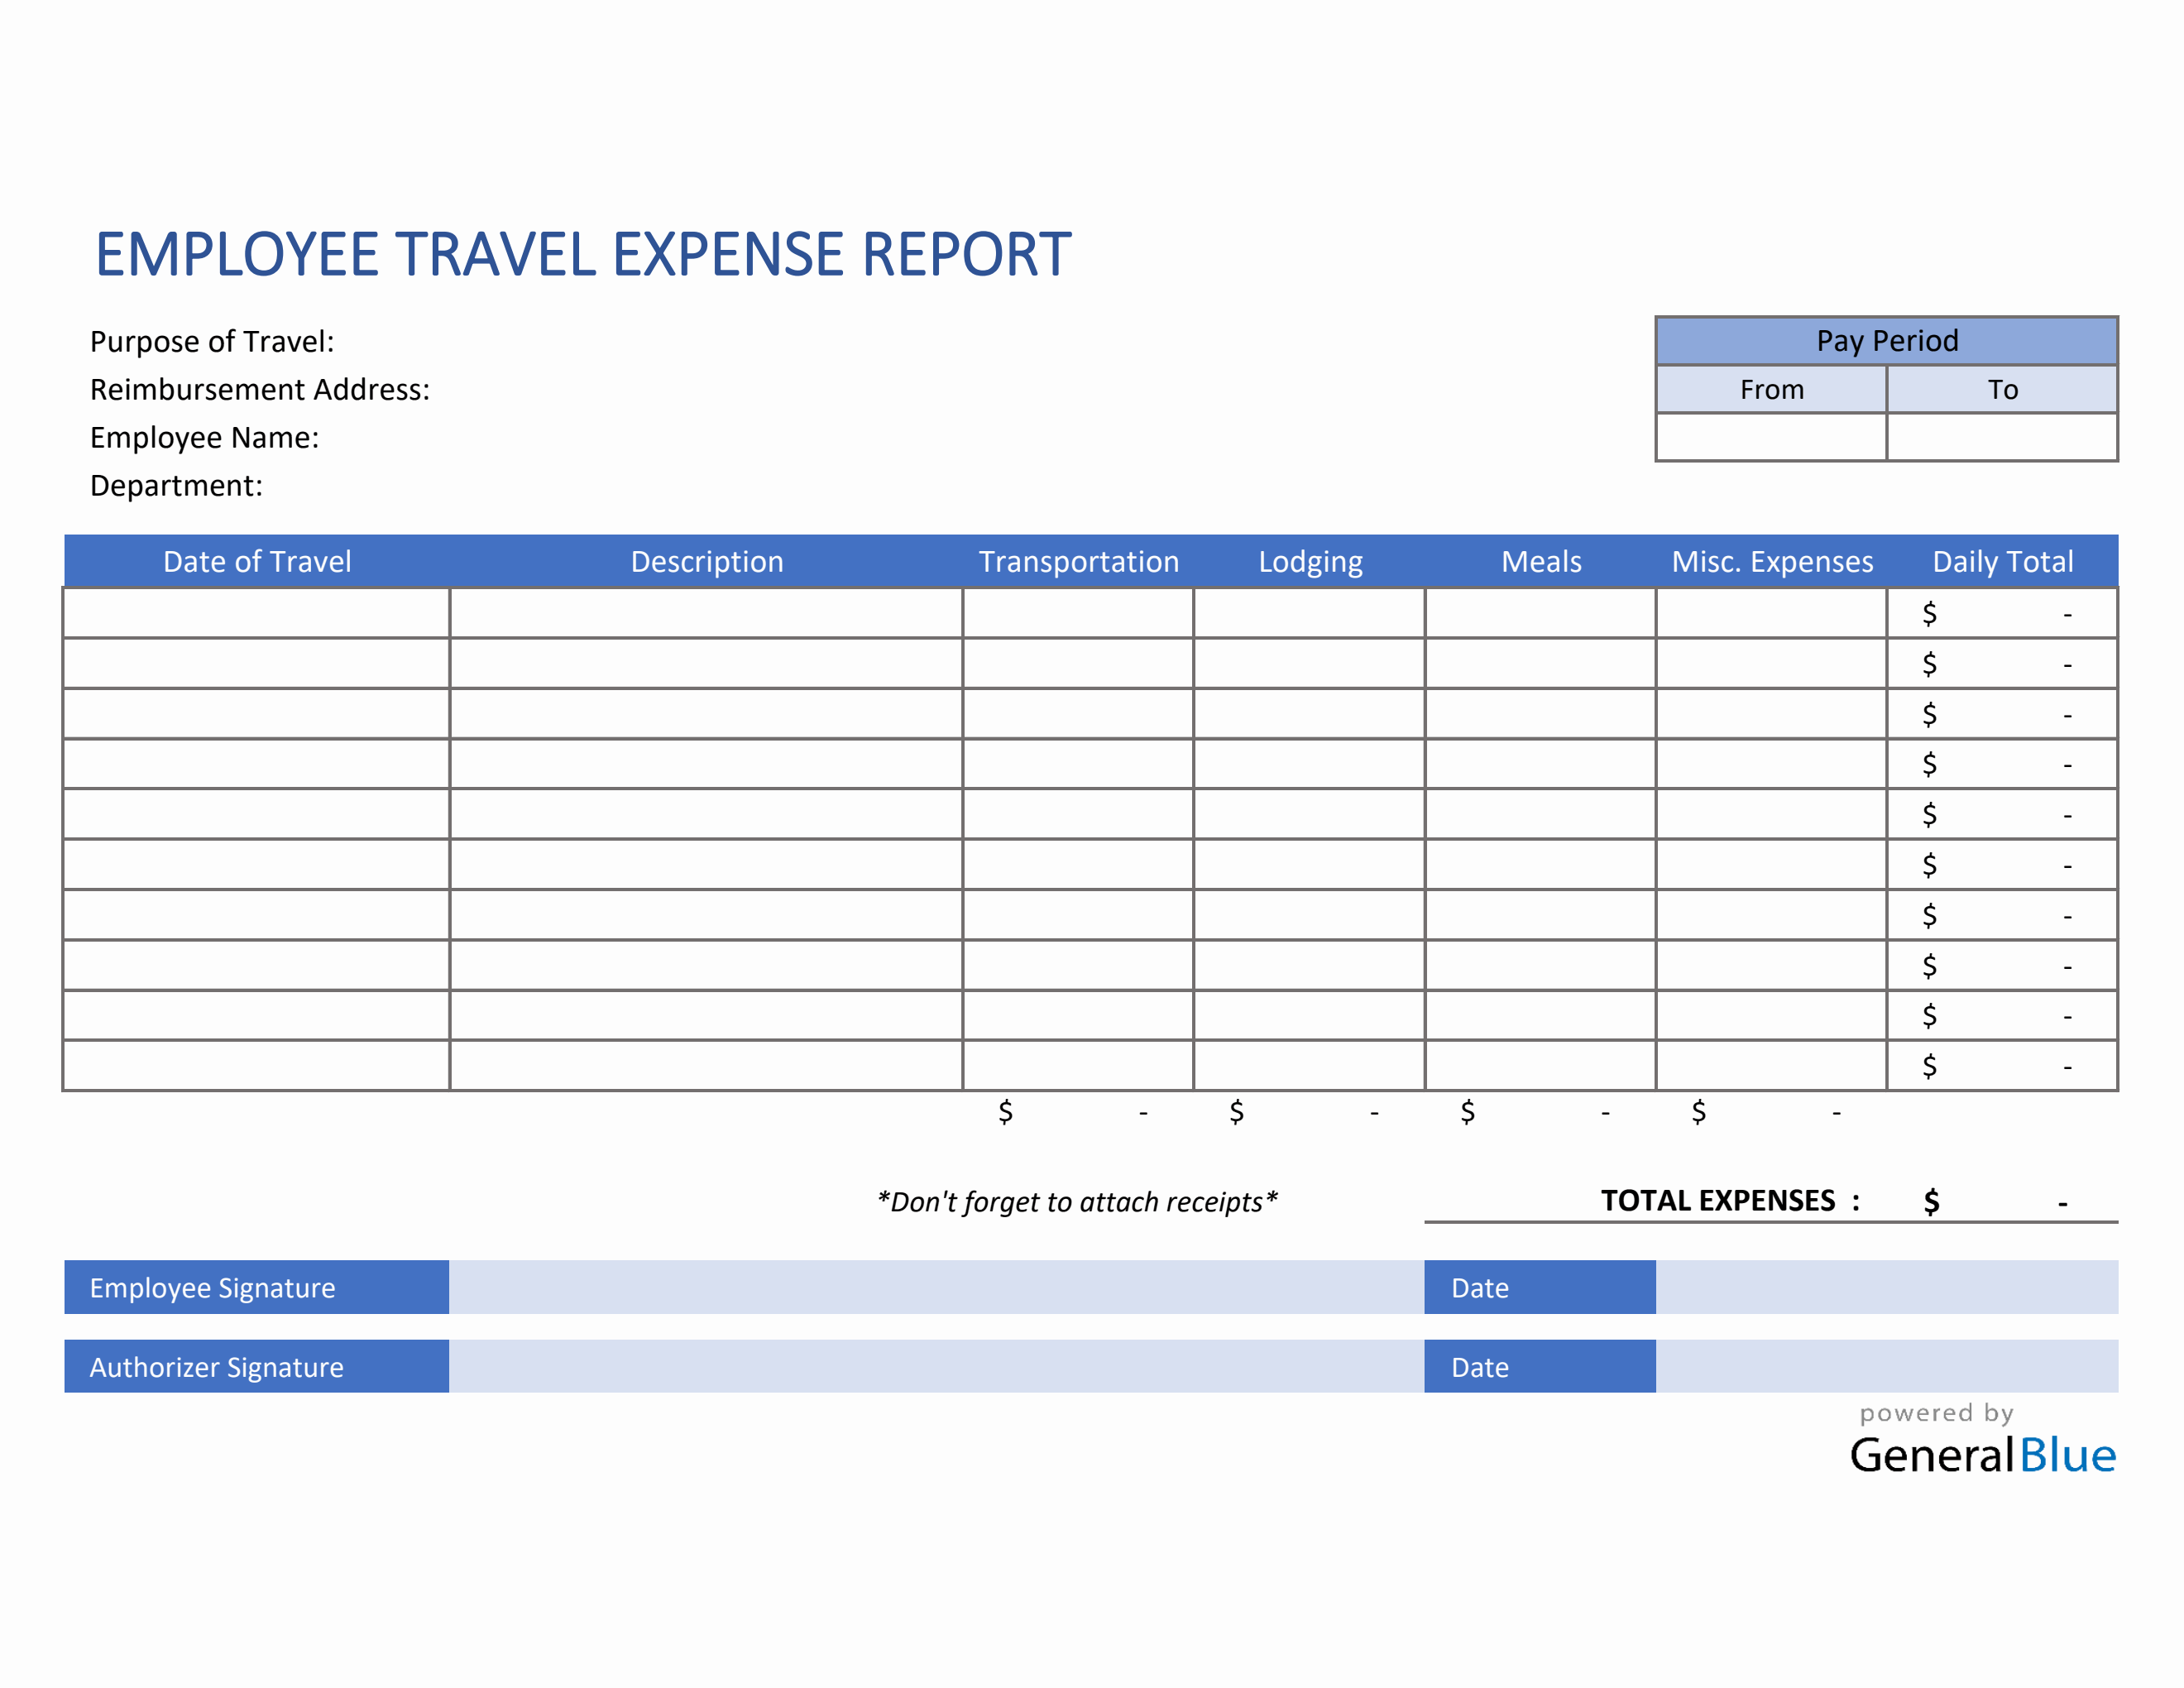 eml travel expenses form